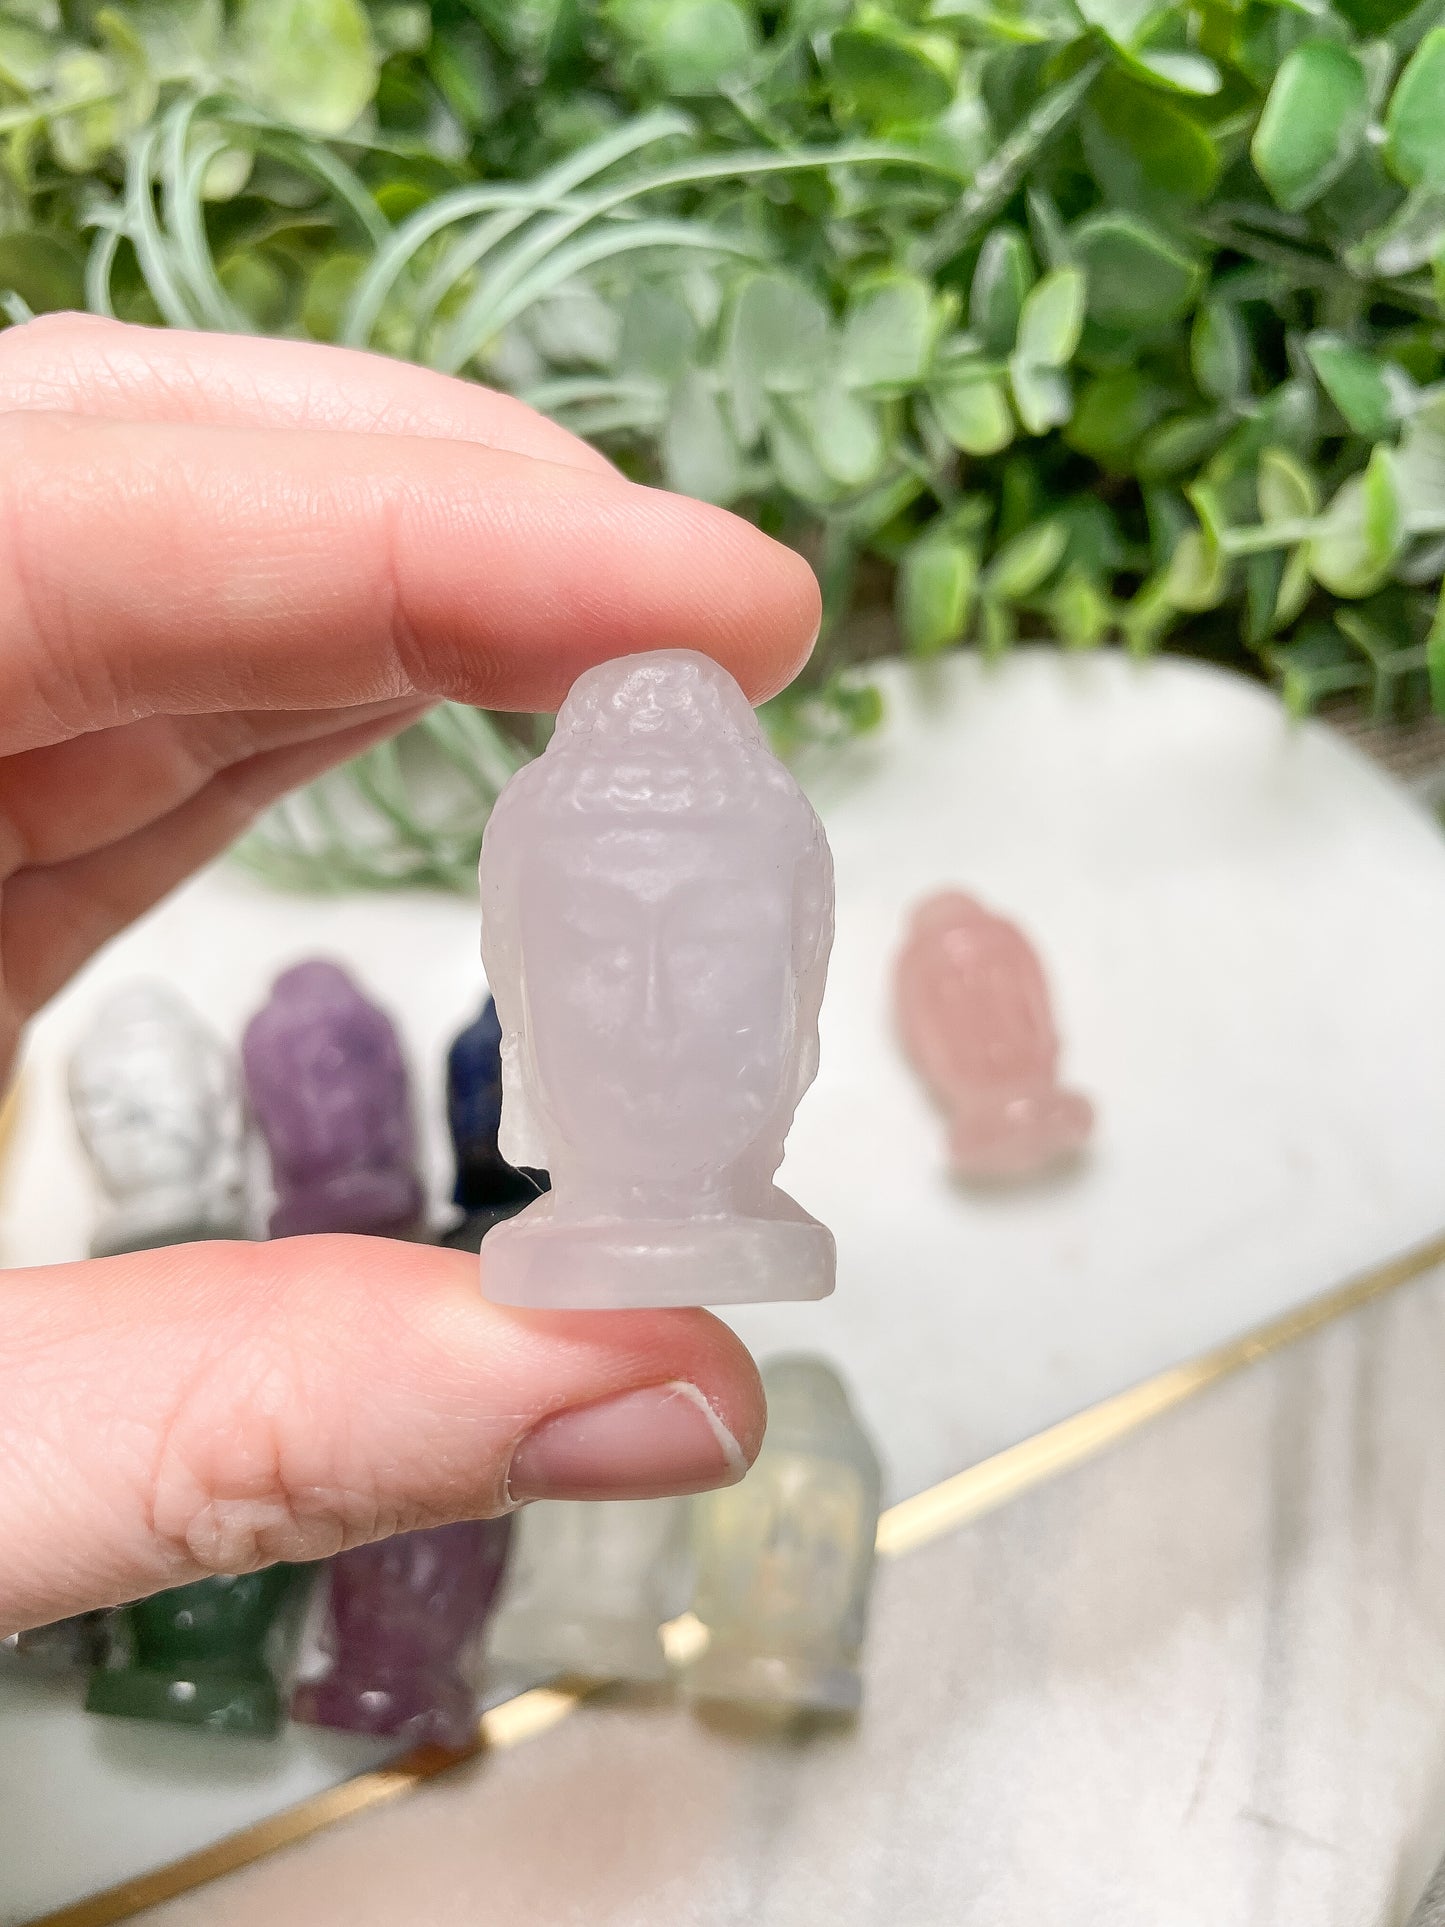 Crystal Buddha Head